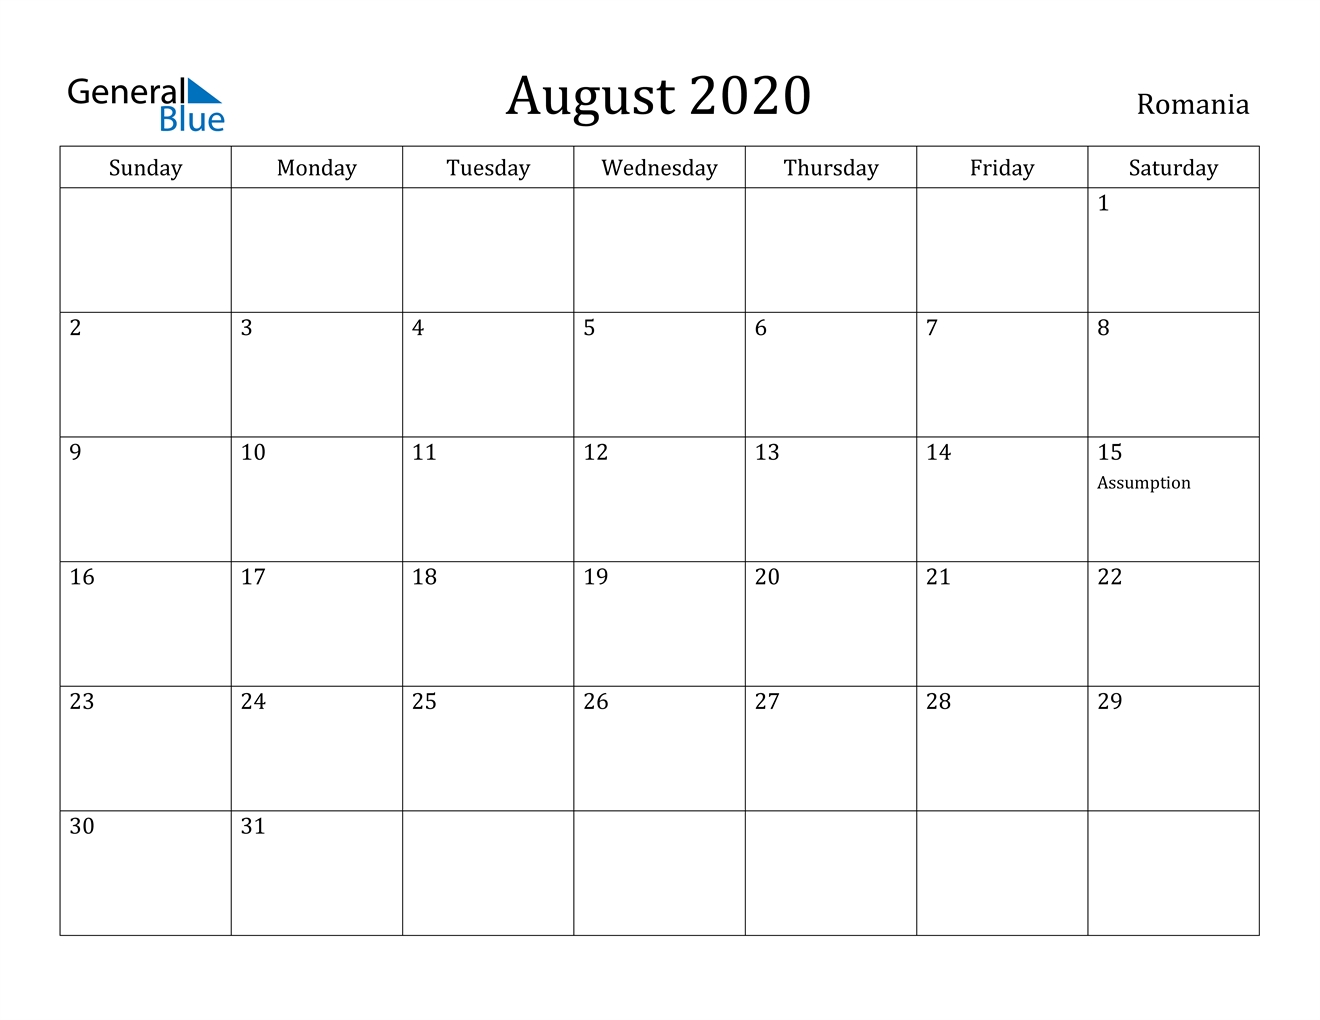 August 2020 Calendar - Romania